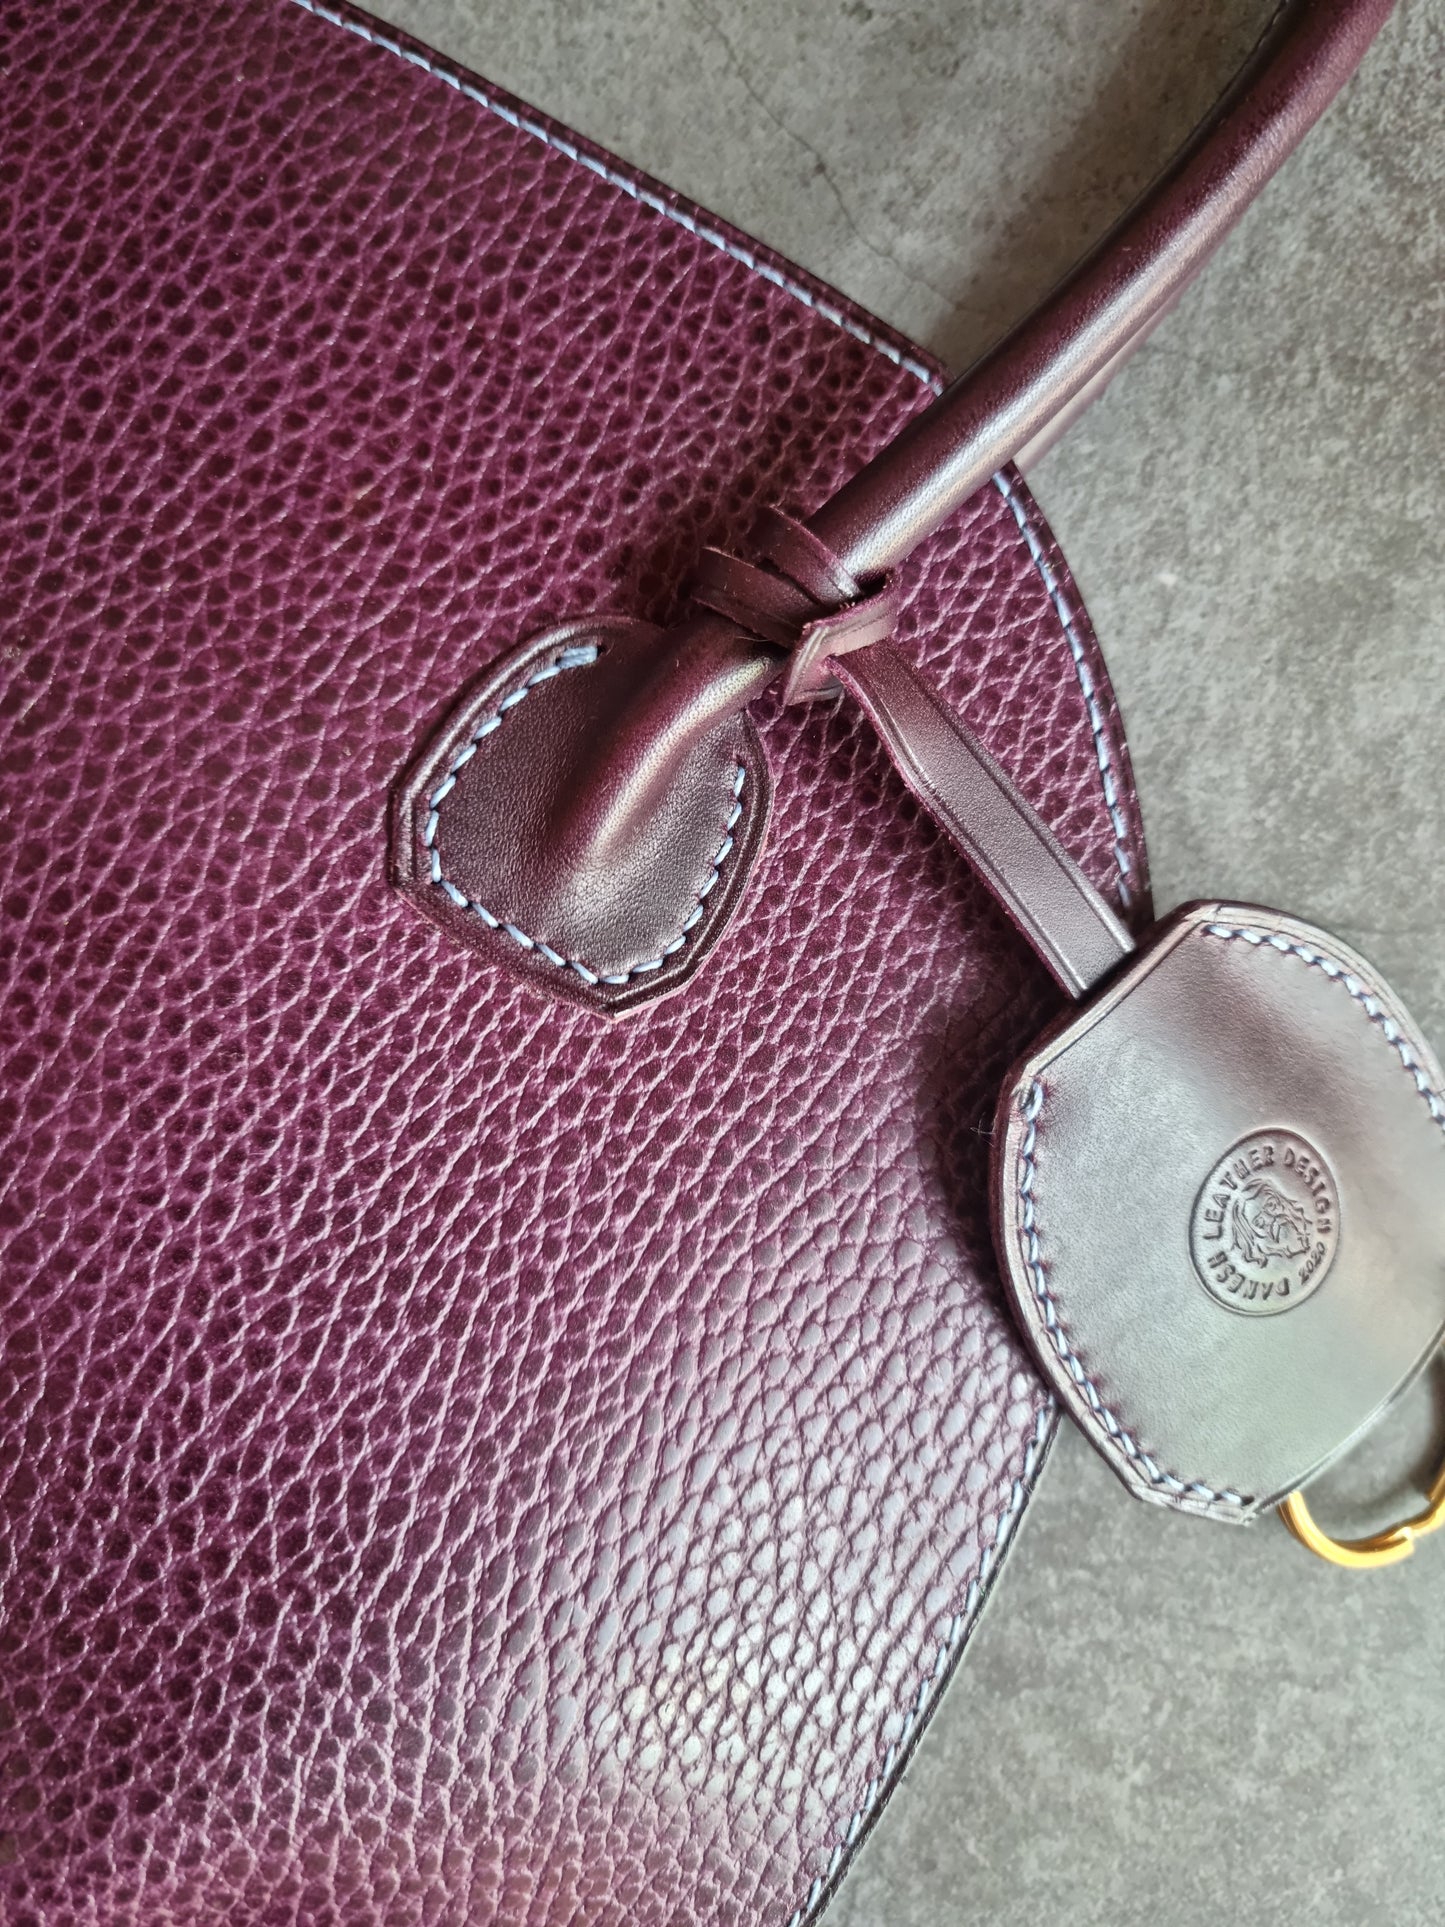 The Auster handbag | Pattern | Template | Pdf